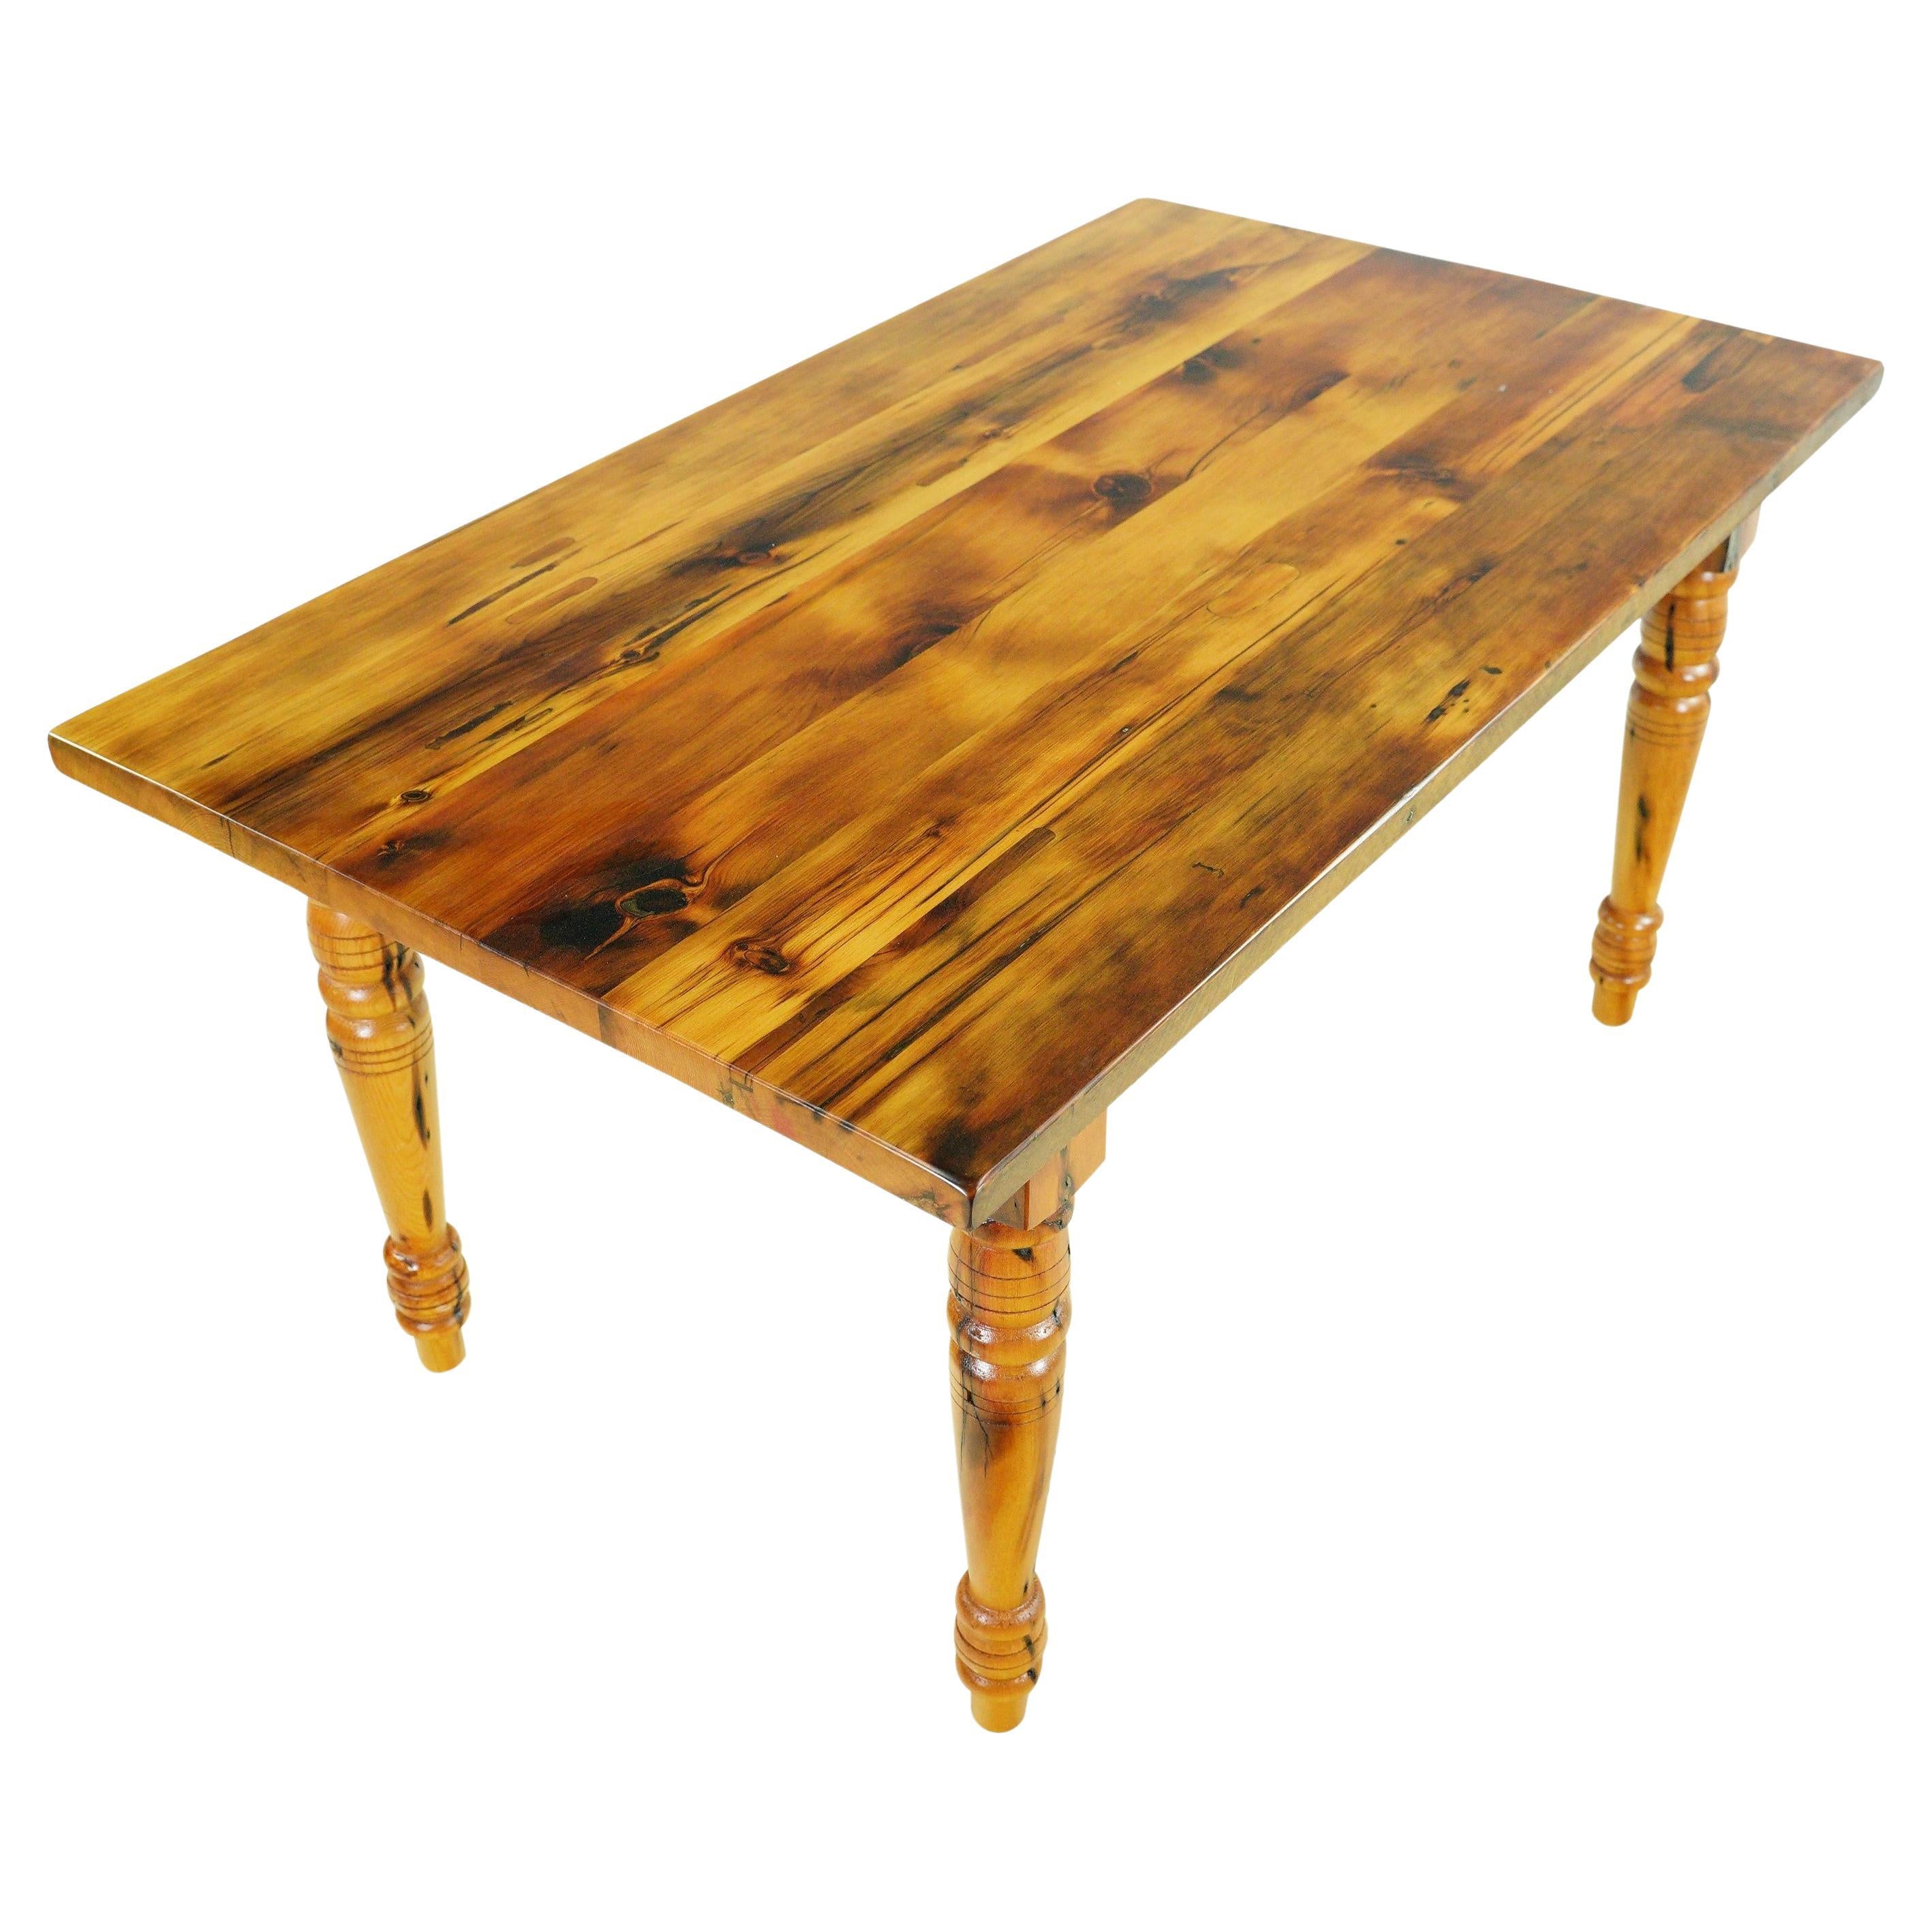 5 ft Reclaimed Pine Turned Leg Dining Farm Table For Sale